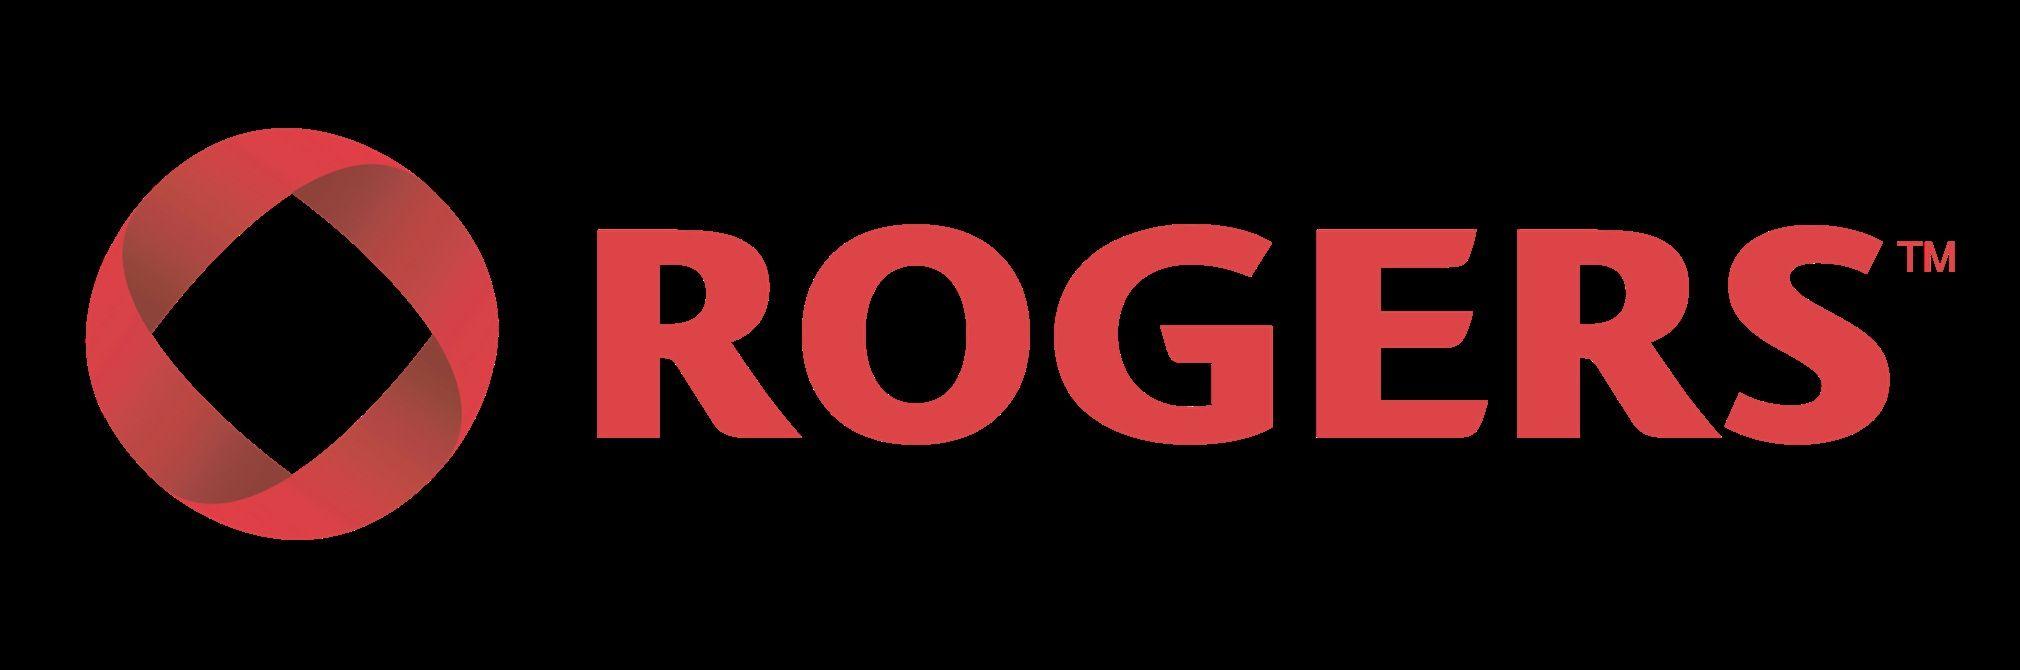 Rogers Logo - Rogers Logos